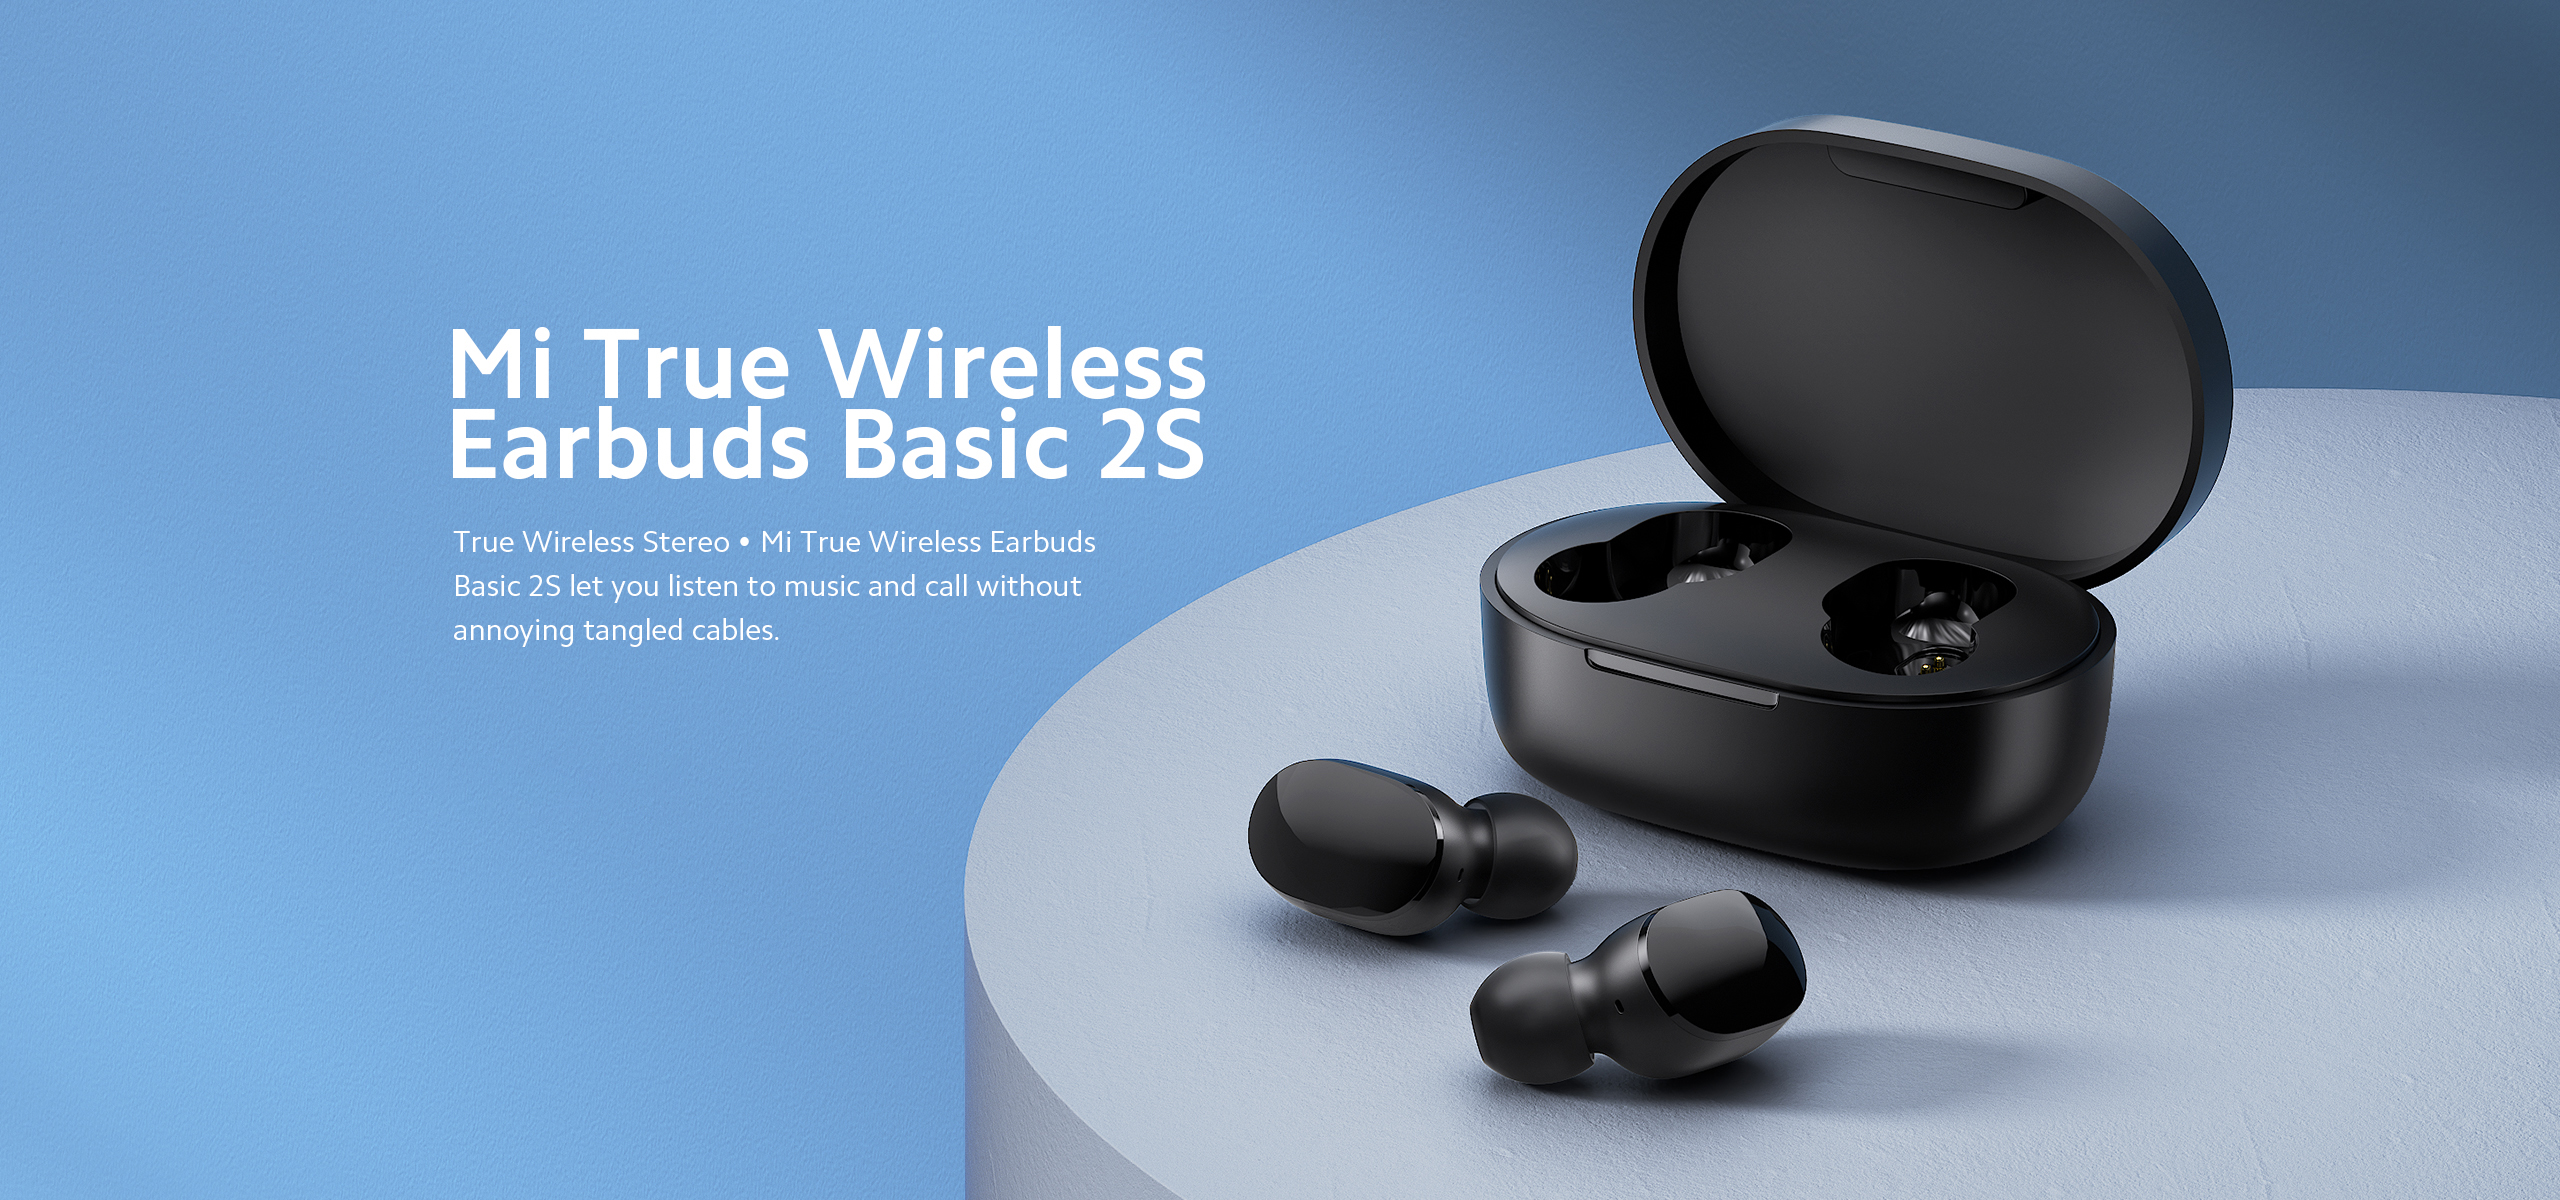 Mi True Wireless Earbuds Basic 2S - Xiaomi Global Official